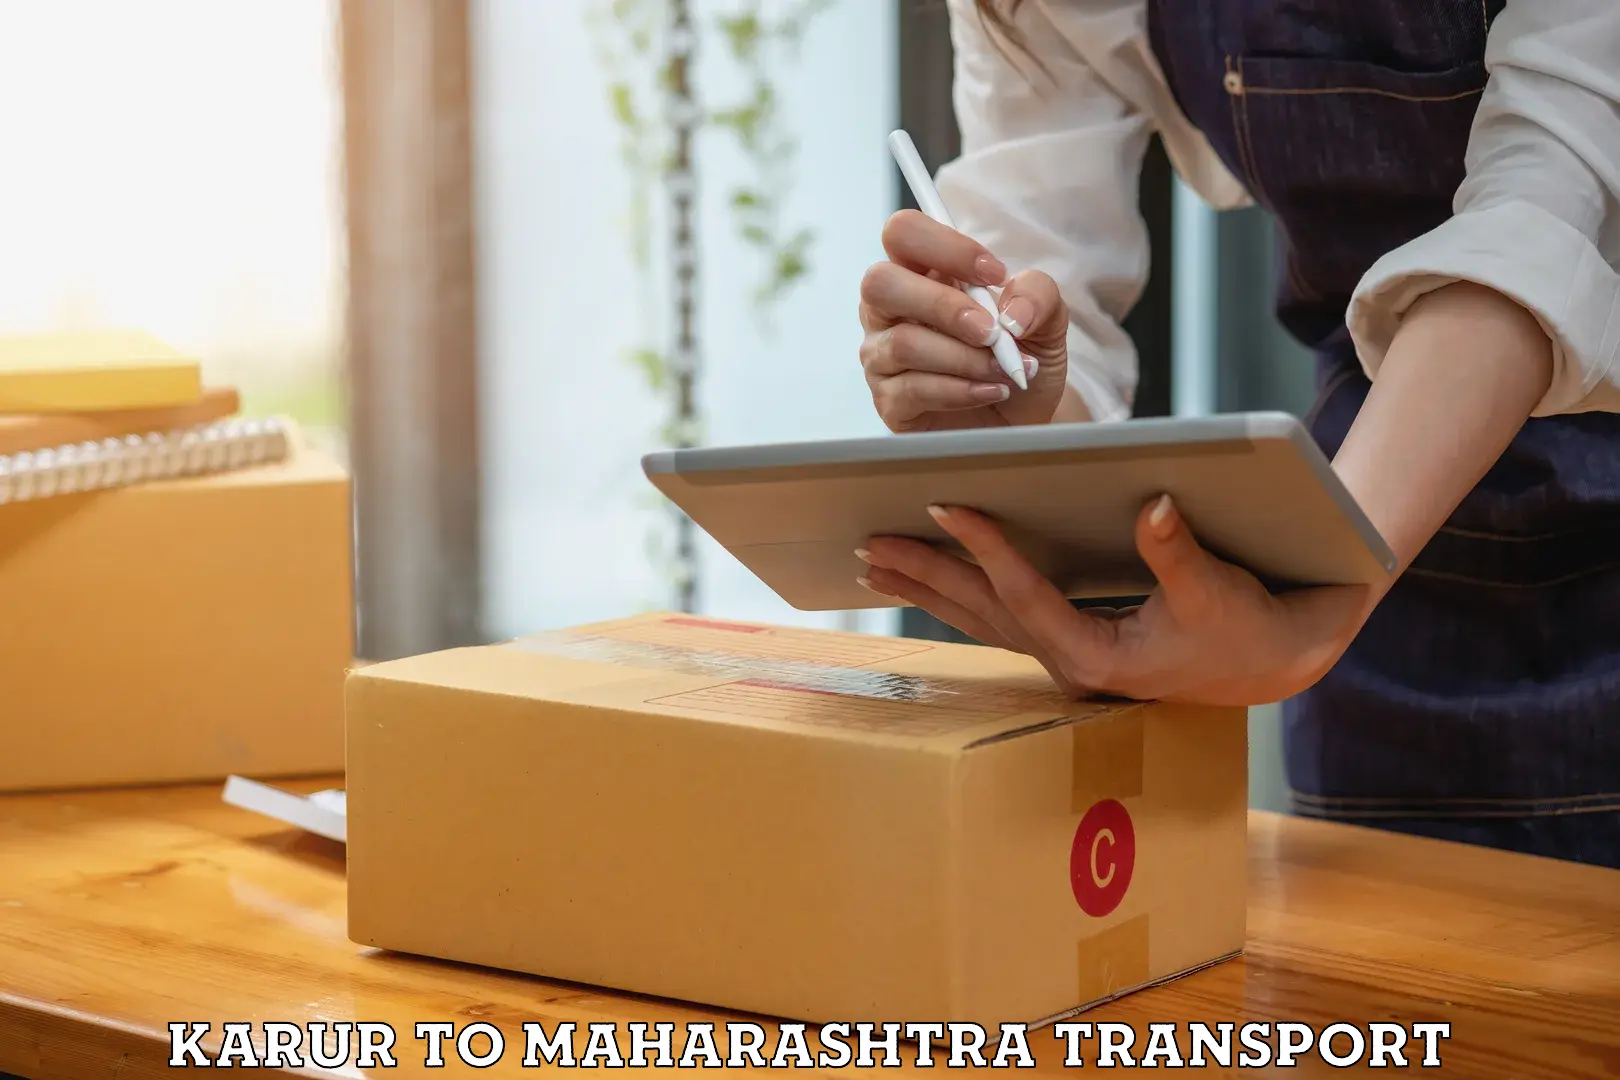 Shipping partner Karur to Maharashtra